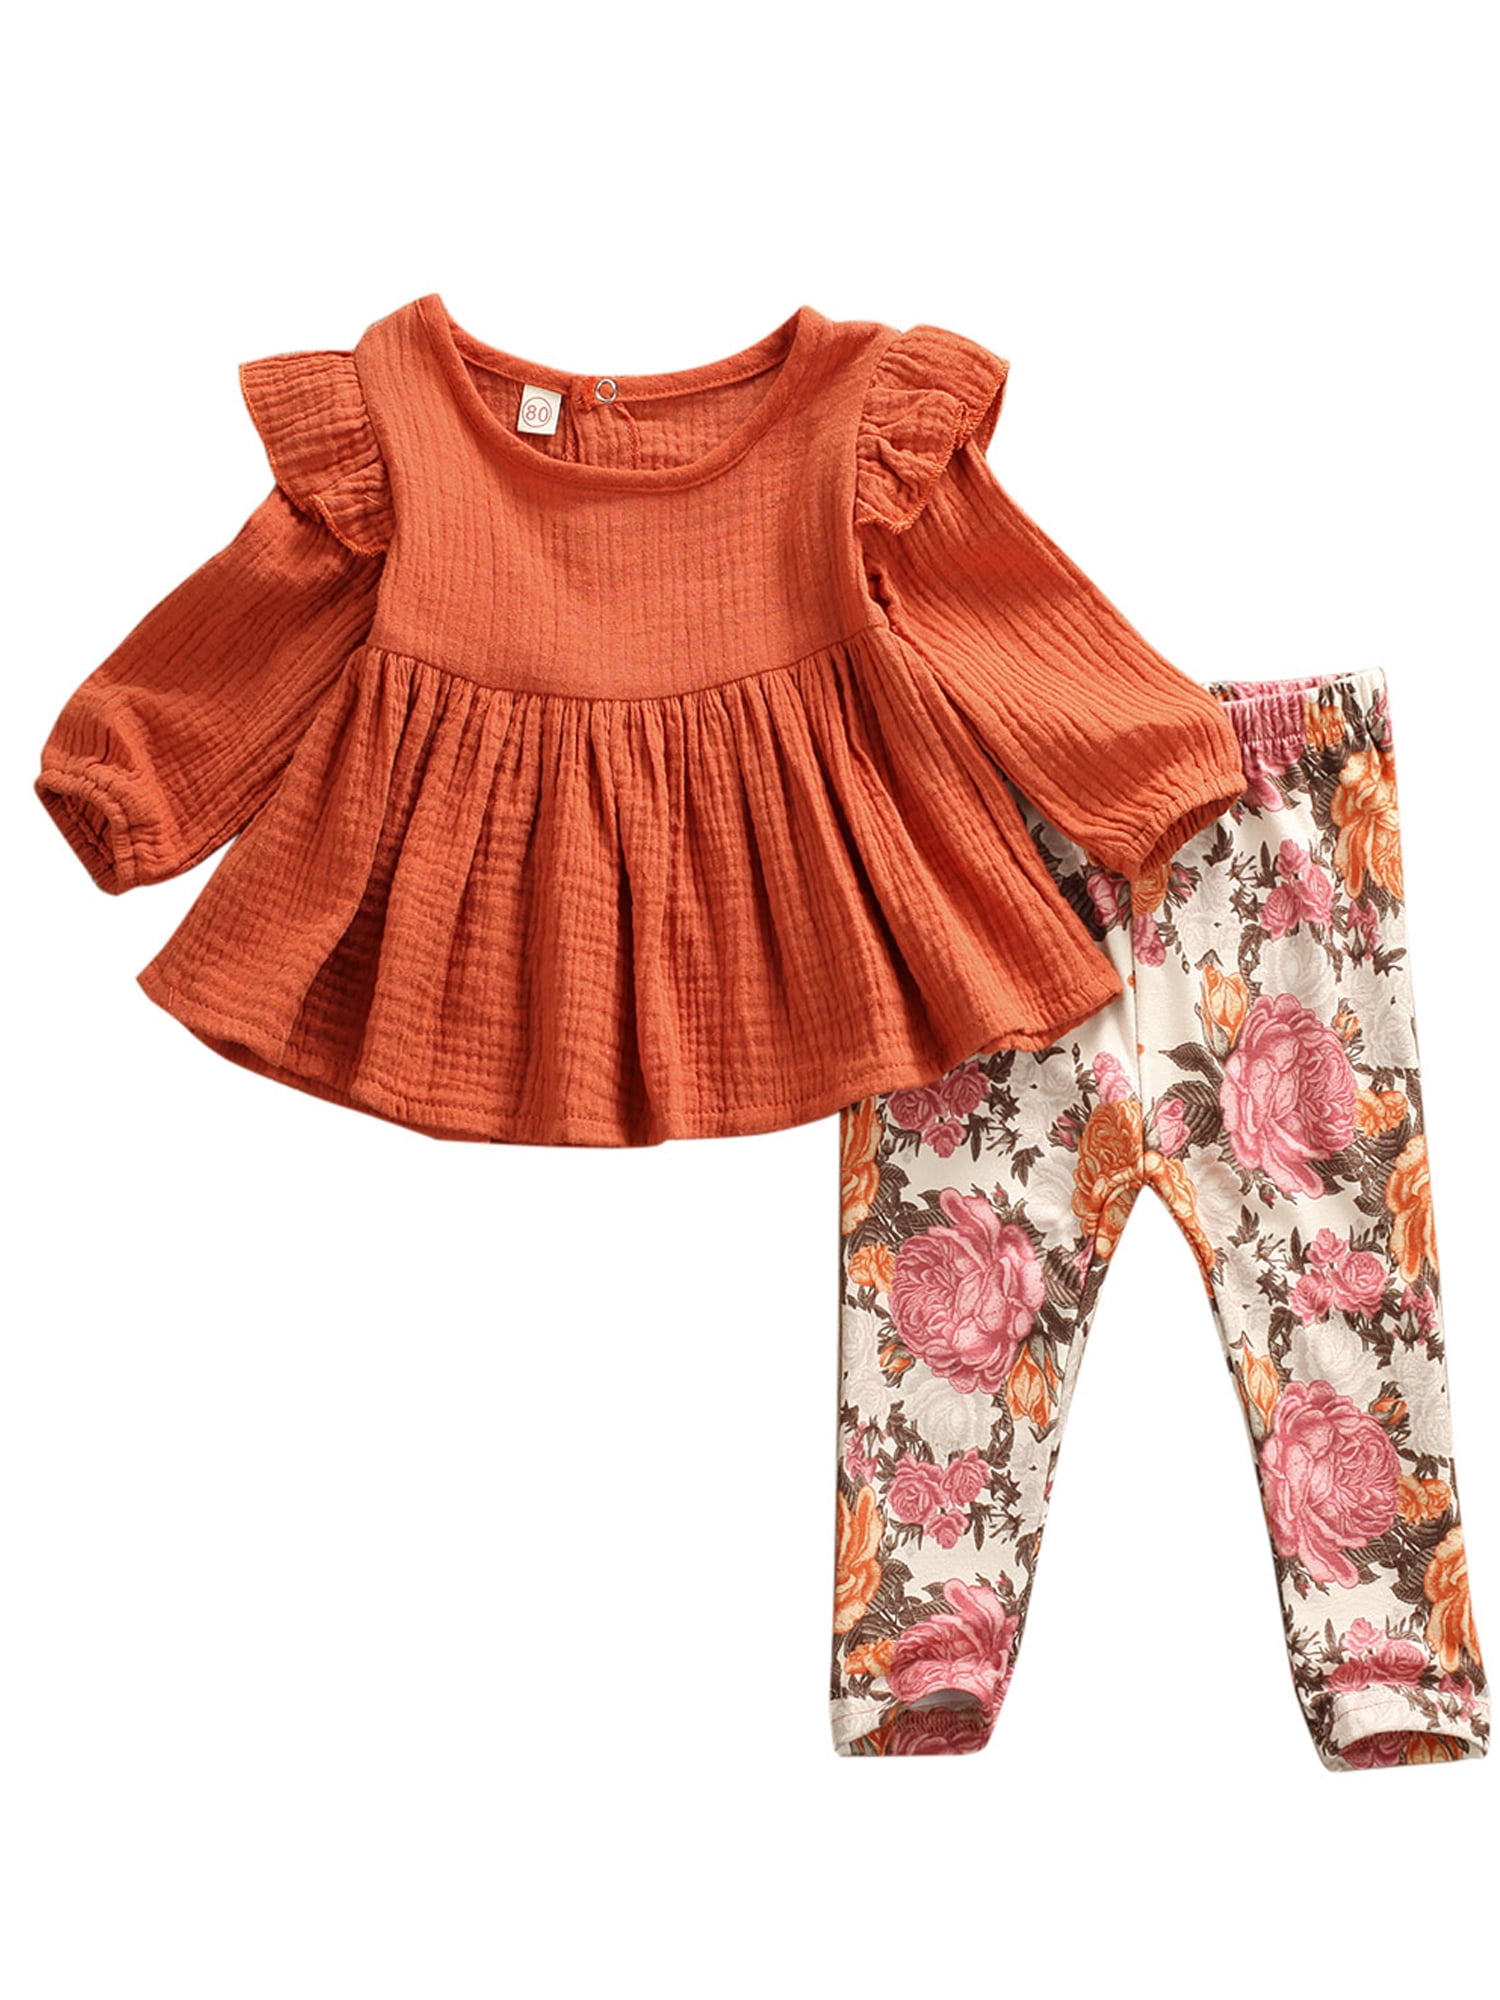 Ruffle Top & Pant Set Bloomingdales Clothing Outfit Sets Sets Girls 2-Pc Baby 